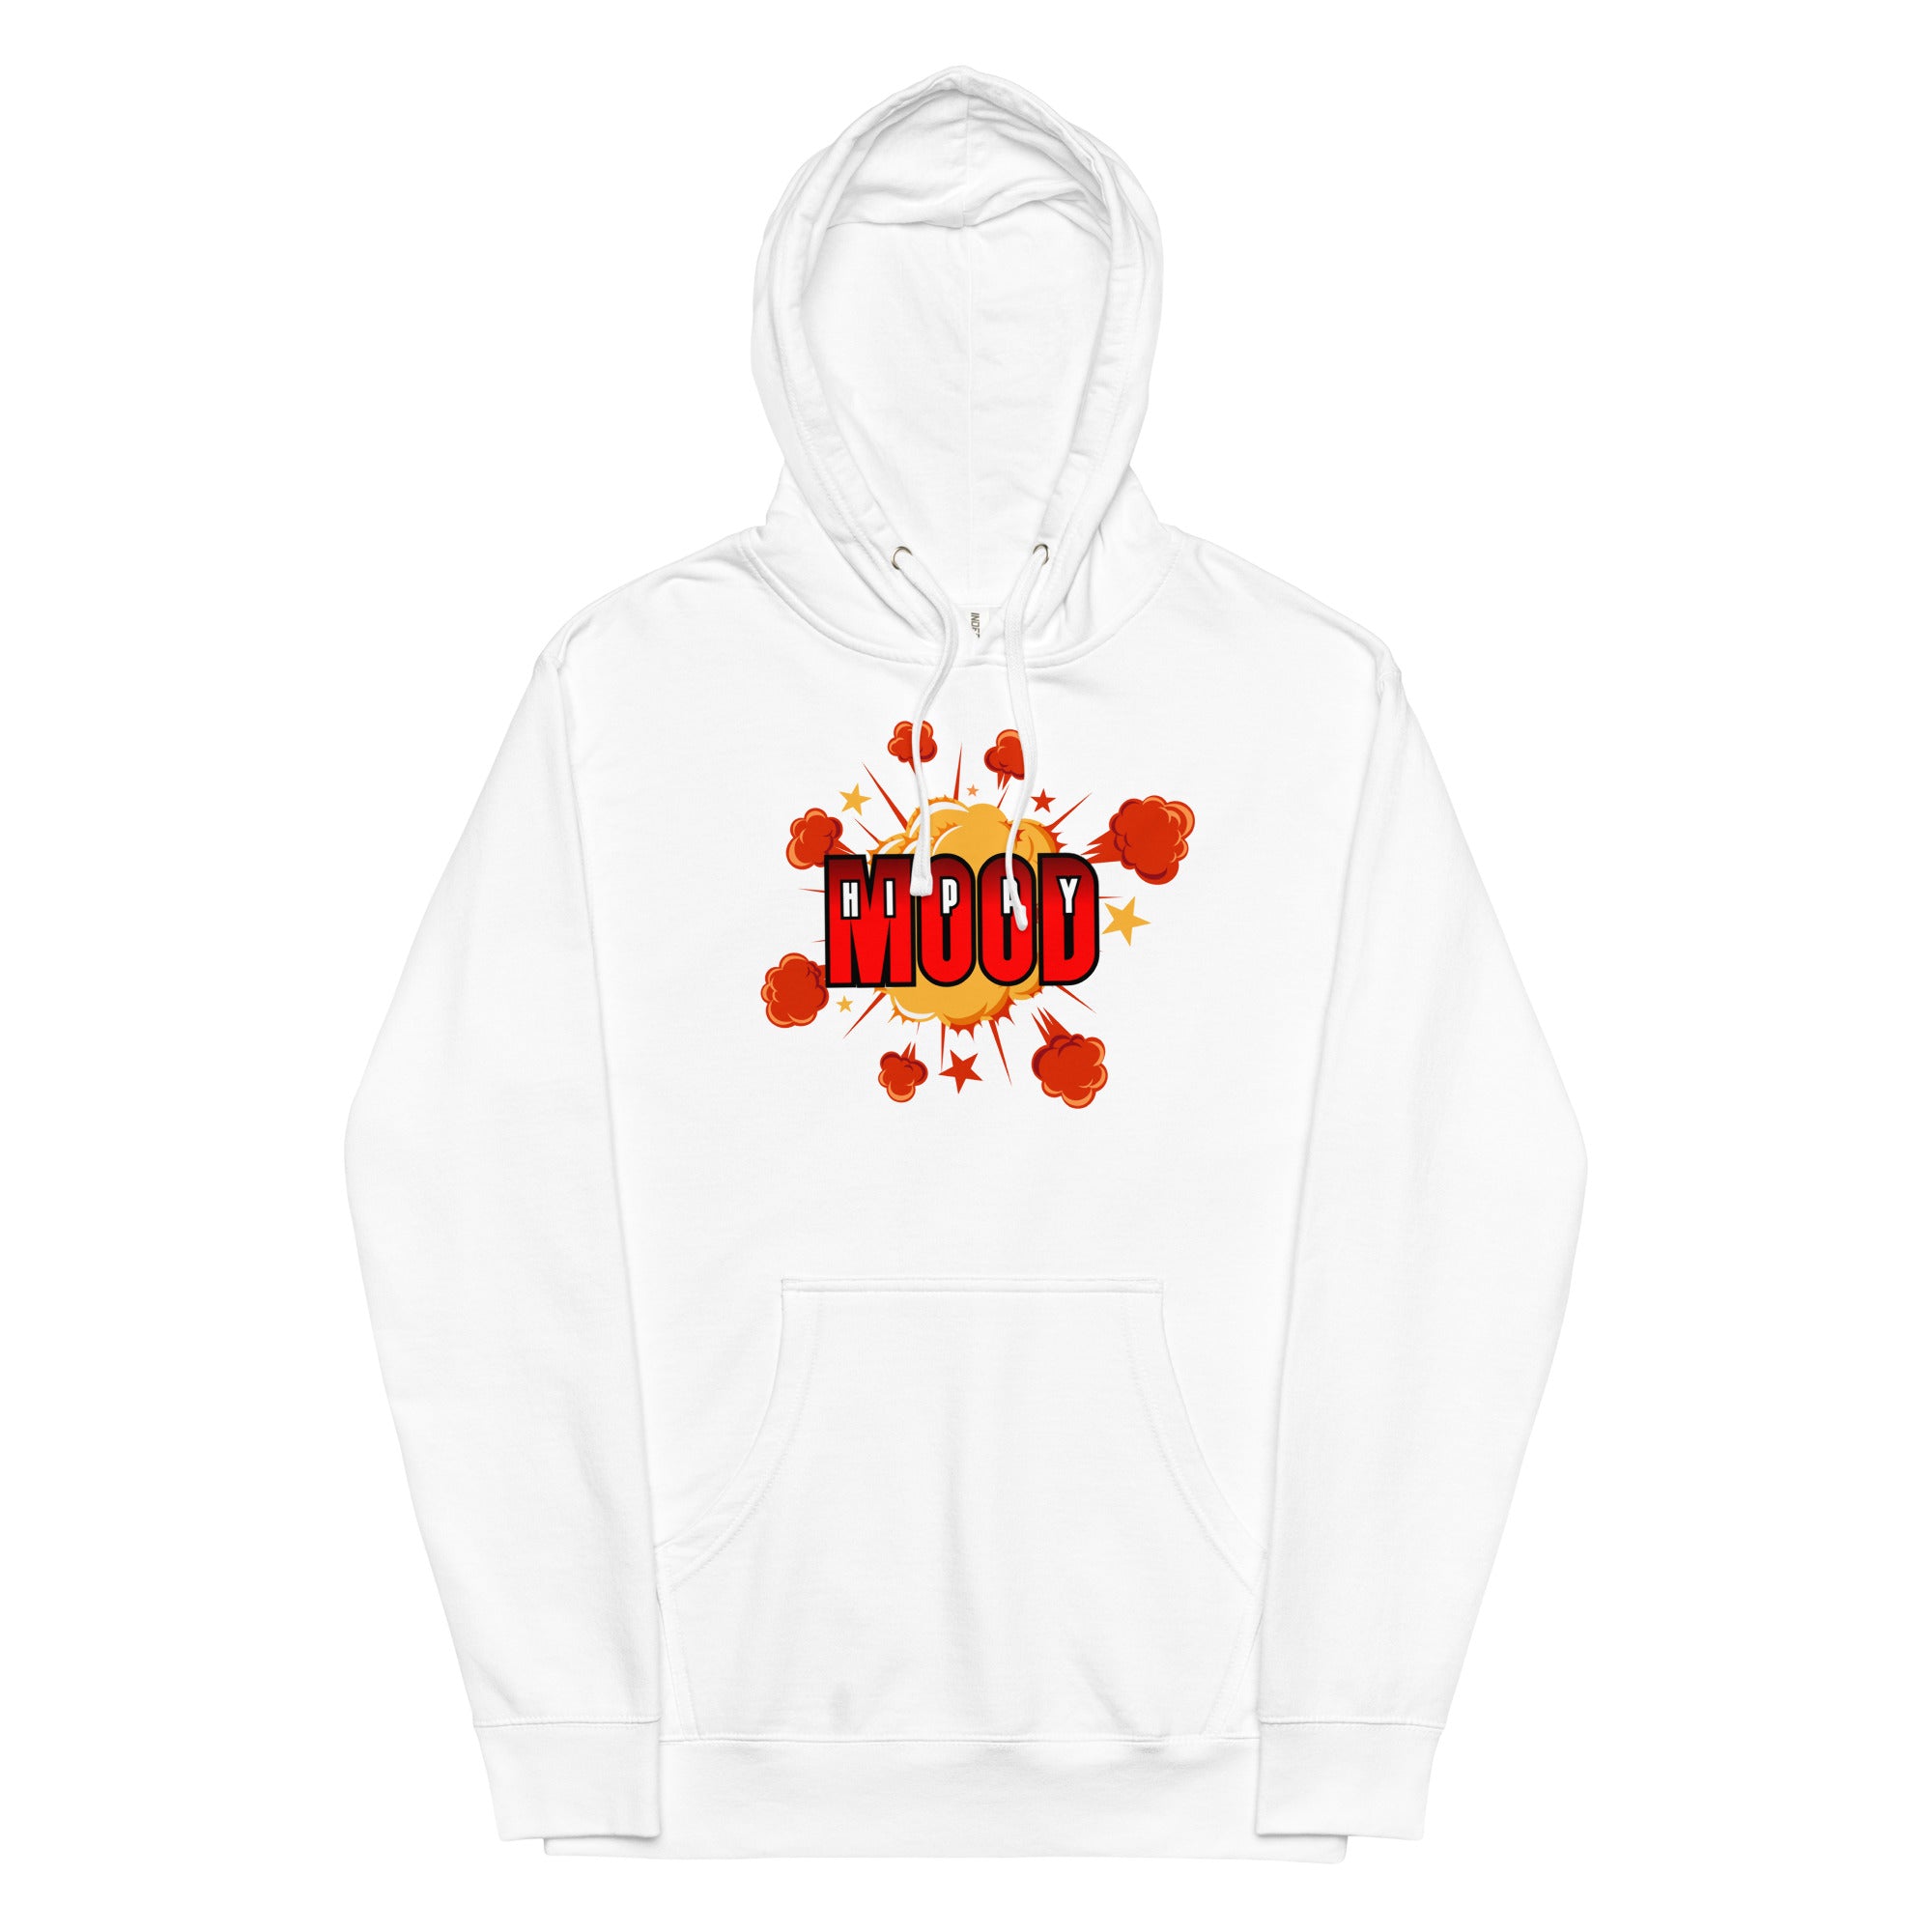 Hippy Mood hoodies